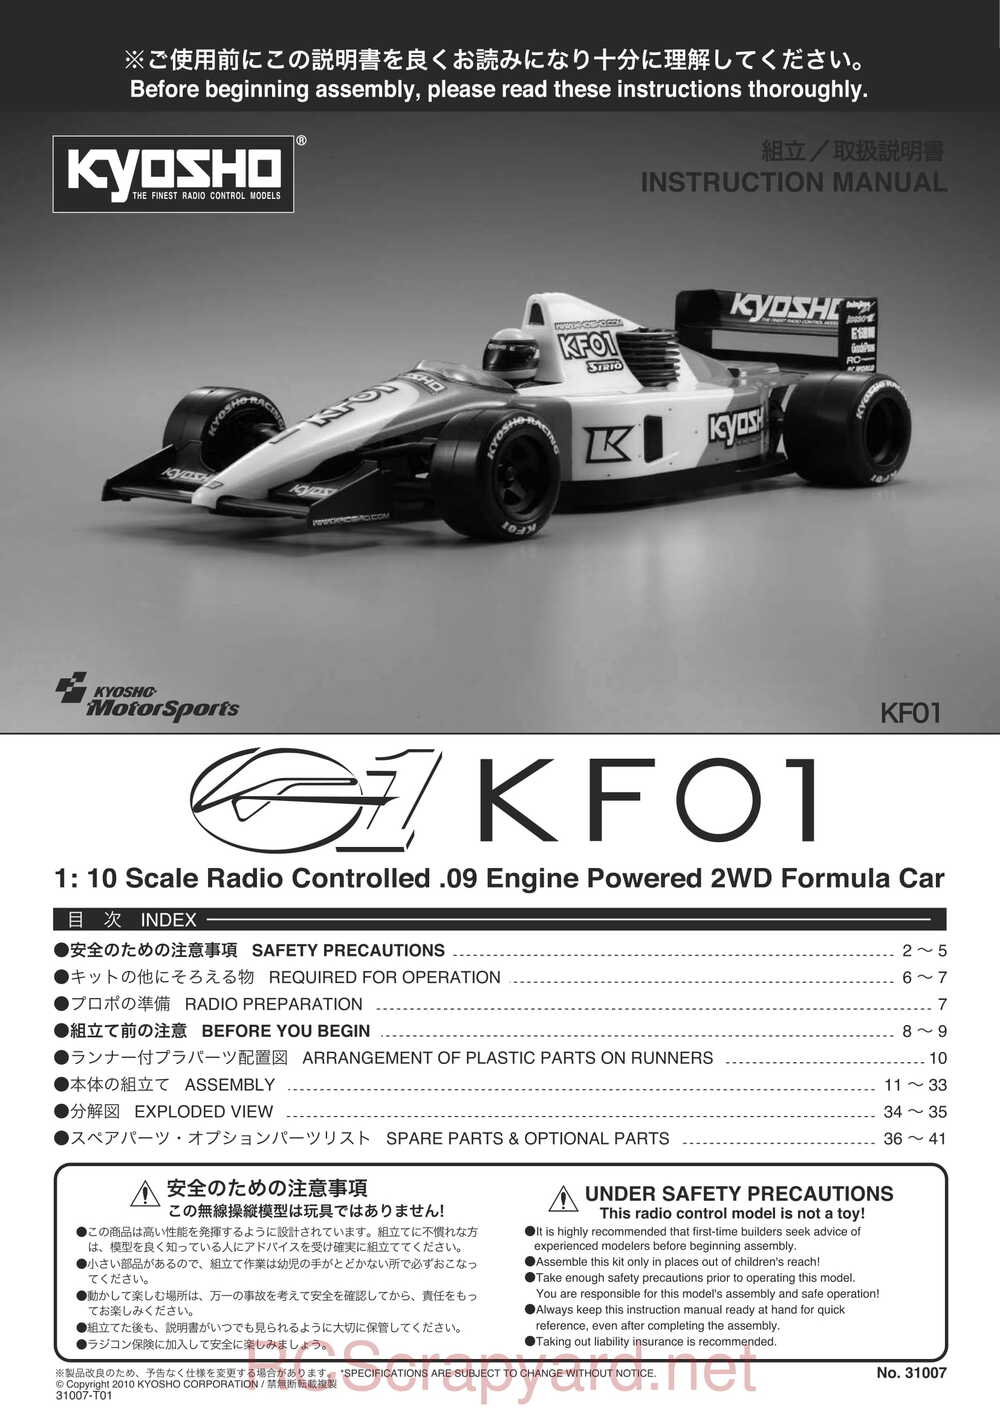 Kyosho - 31007 - KF01 - Manual - Page 01